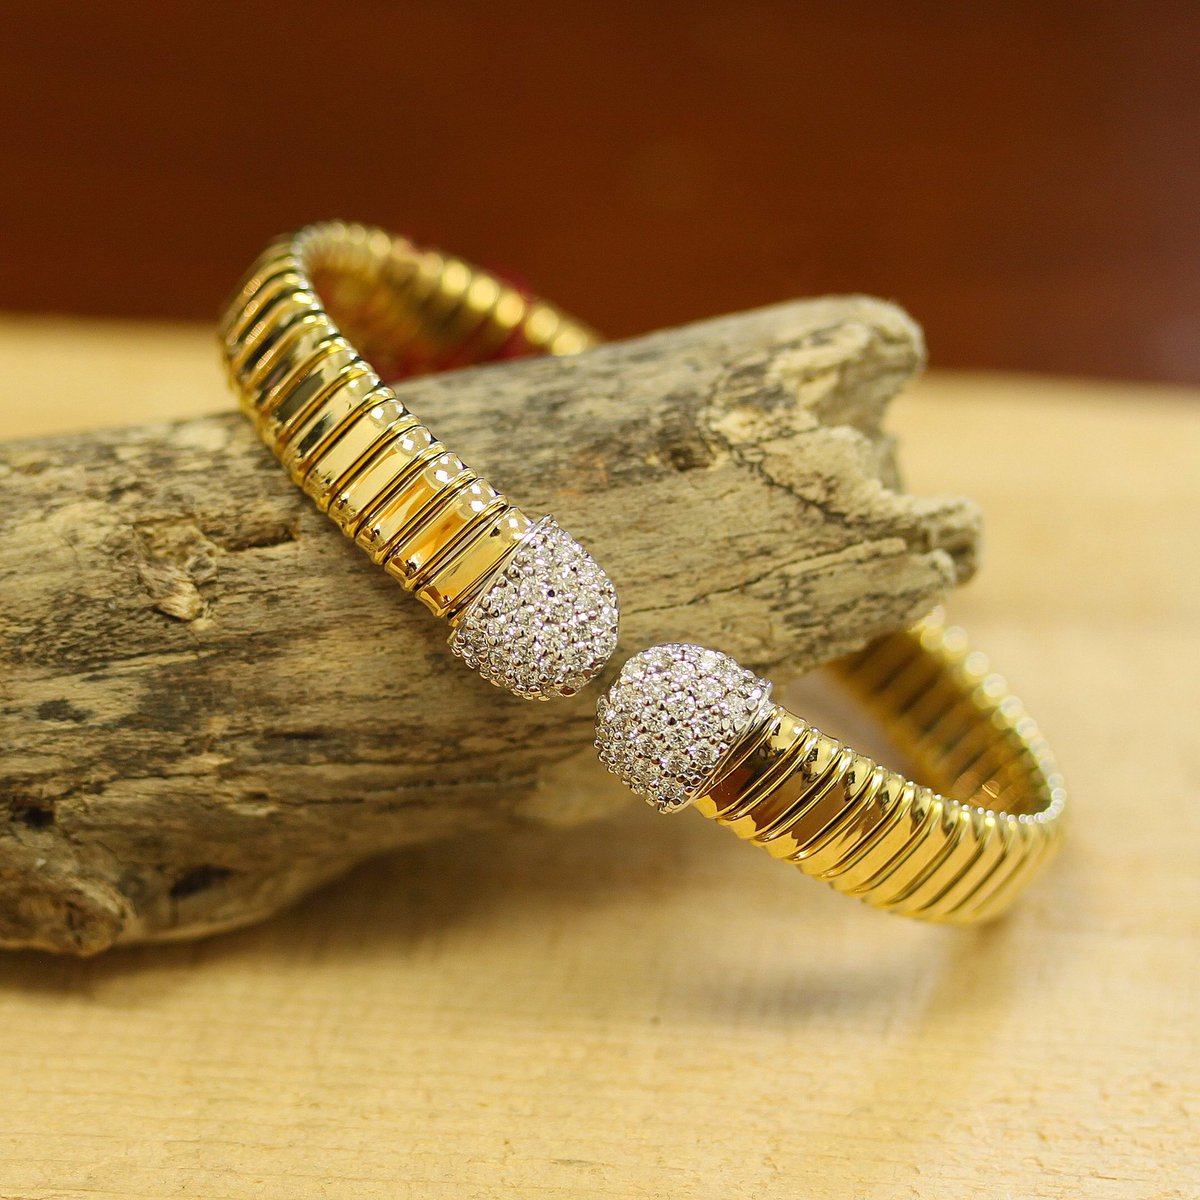 Open front yellow gold cuff bracelet with shimmering diamond caps⠀
⠀
bit.ly/2GVo16b⠀
⠀
#goldbracelet #bracelet #bracelets #diamondbracelet #diamondbracelets #diamonds #braceletlove #armcandy #wristcandy #wristgame #bangle #braceletsoftheday #cuffbracelet #jewelry ⠀